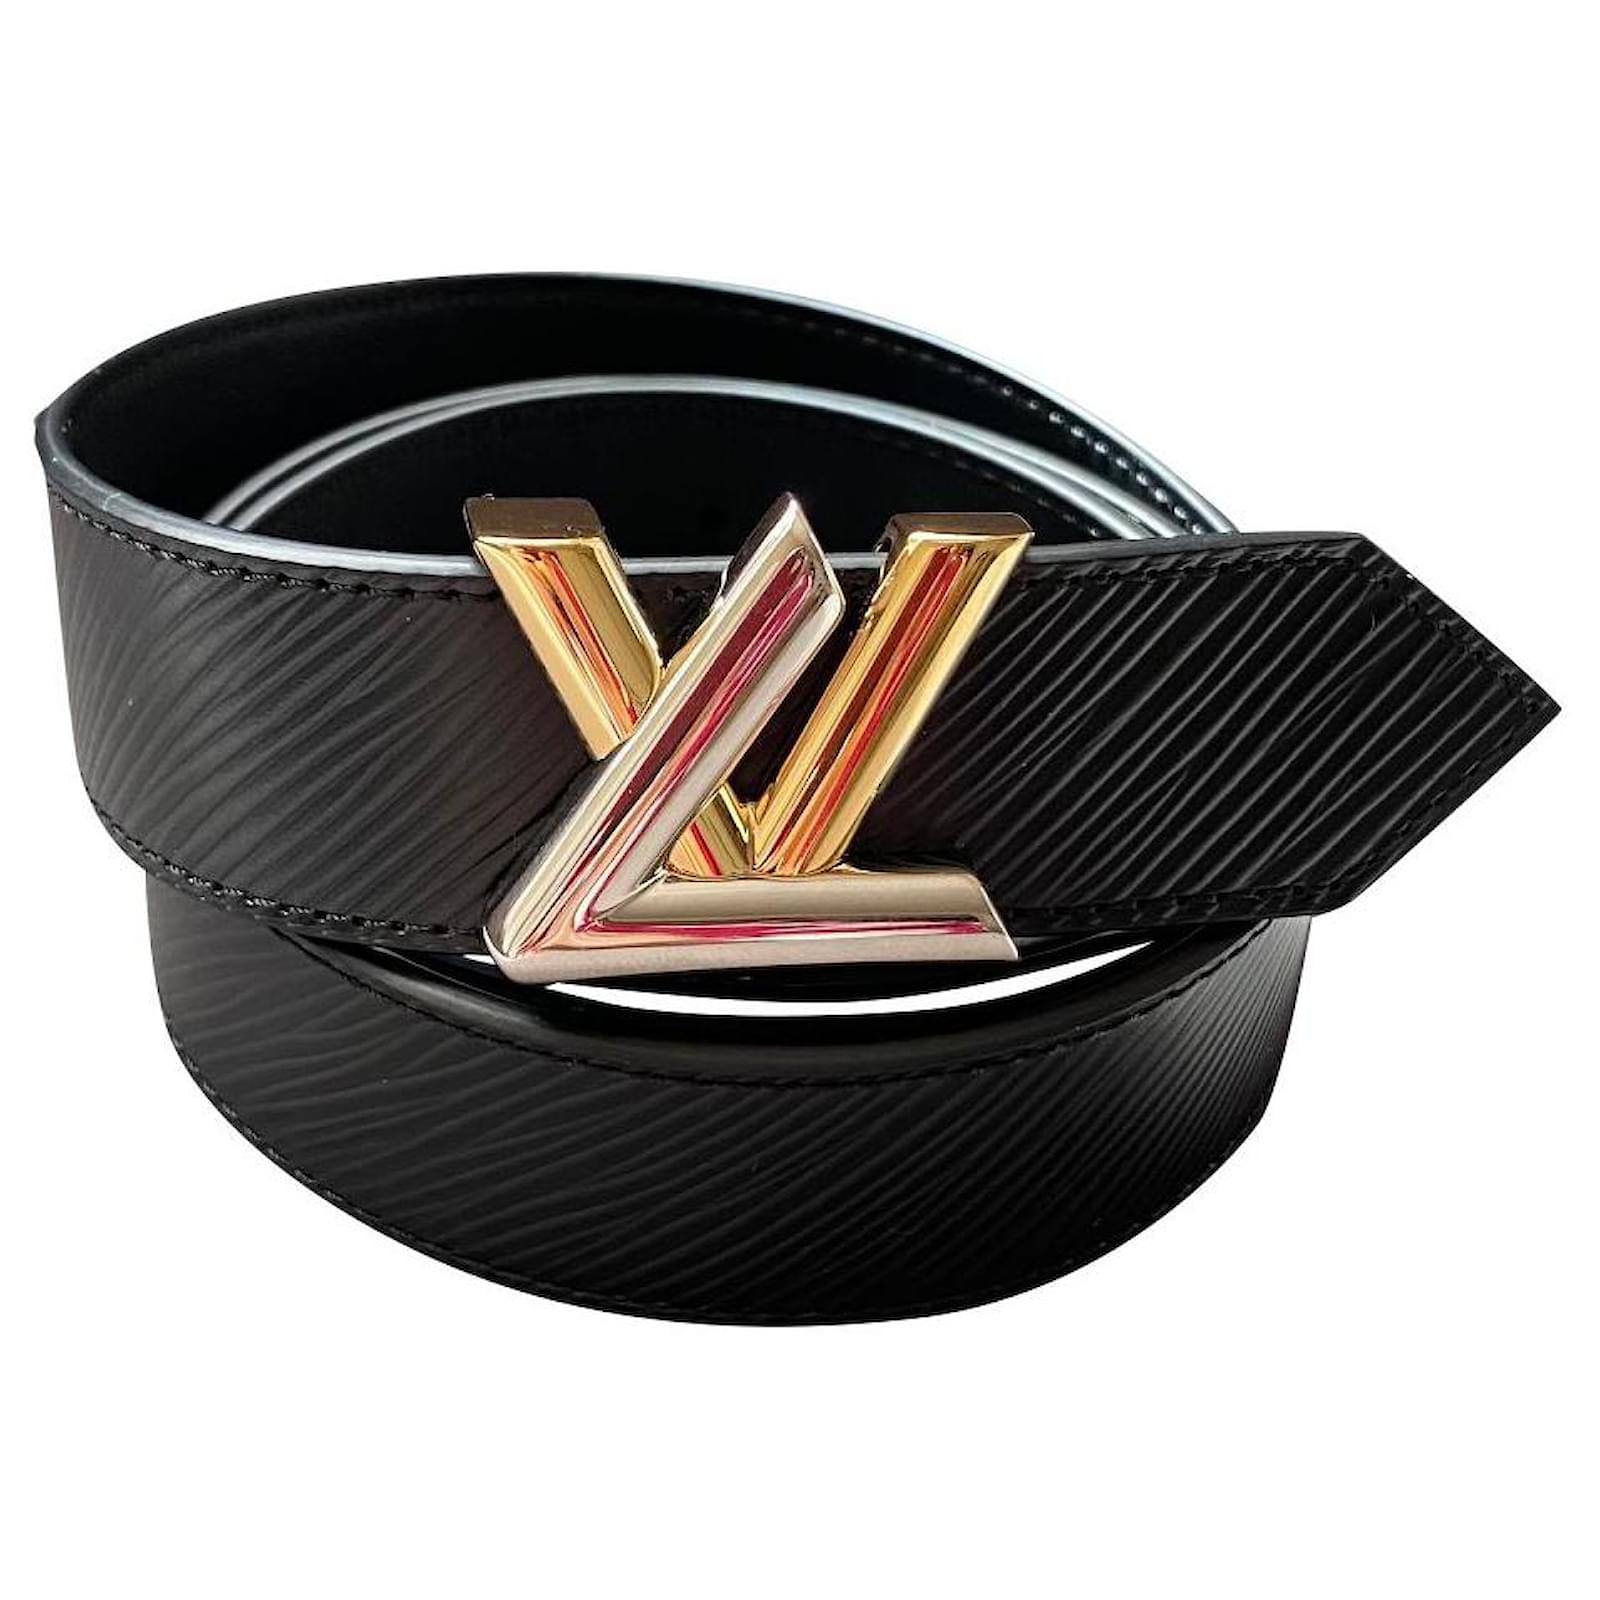 Louis Vuitton LV Twist Belt